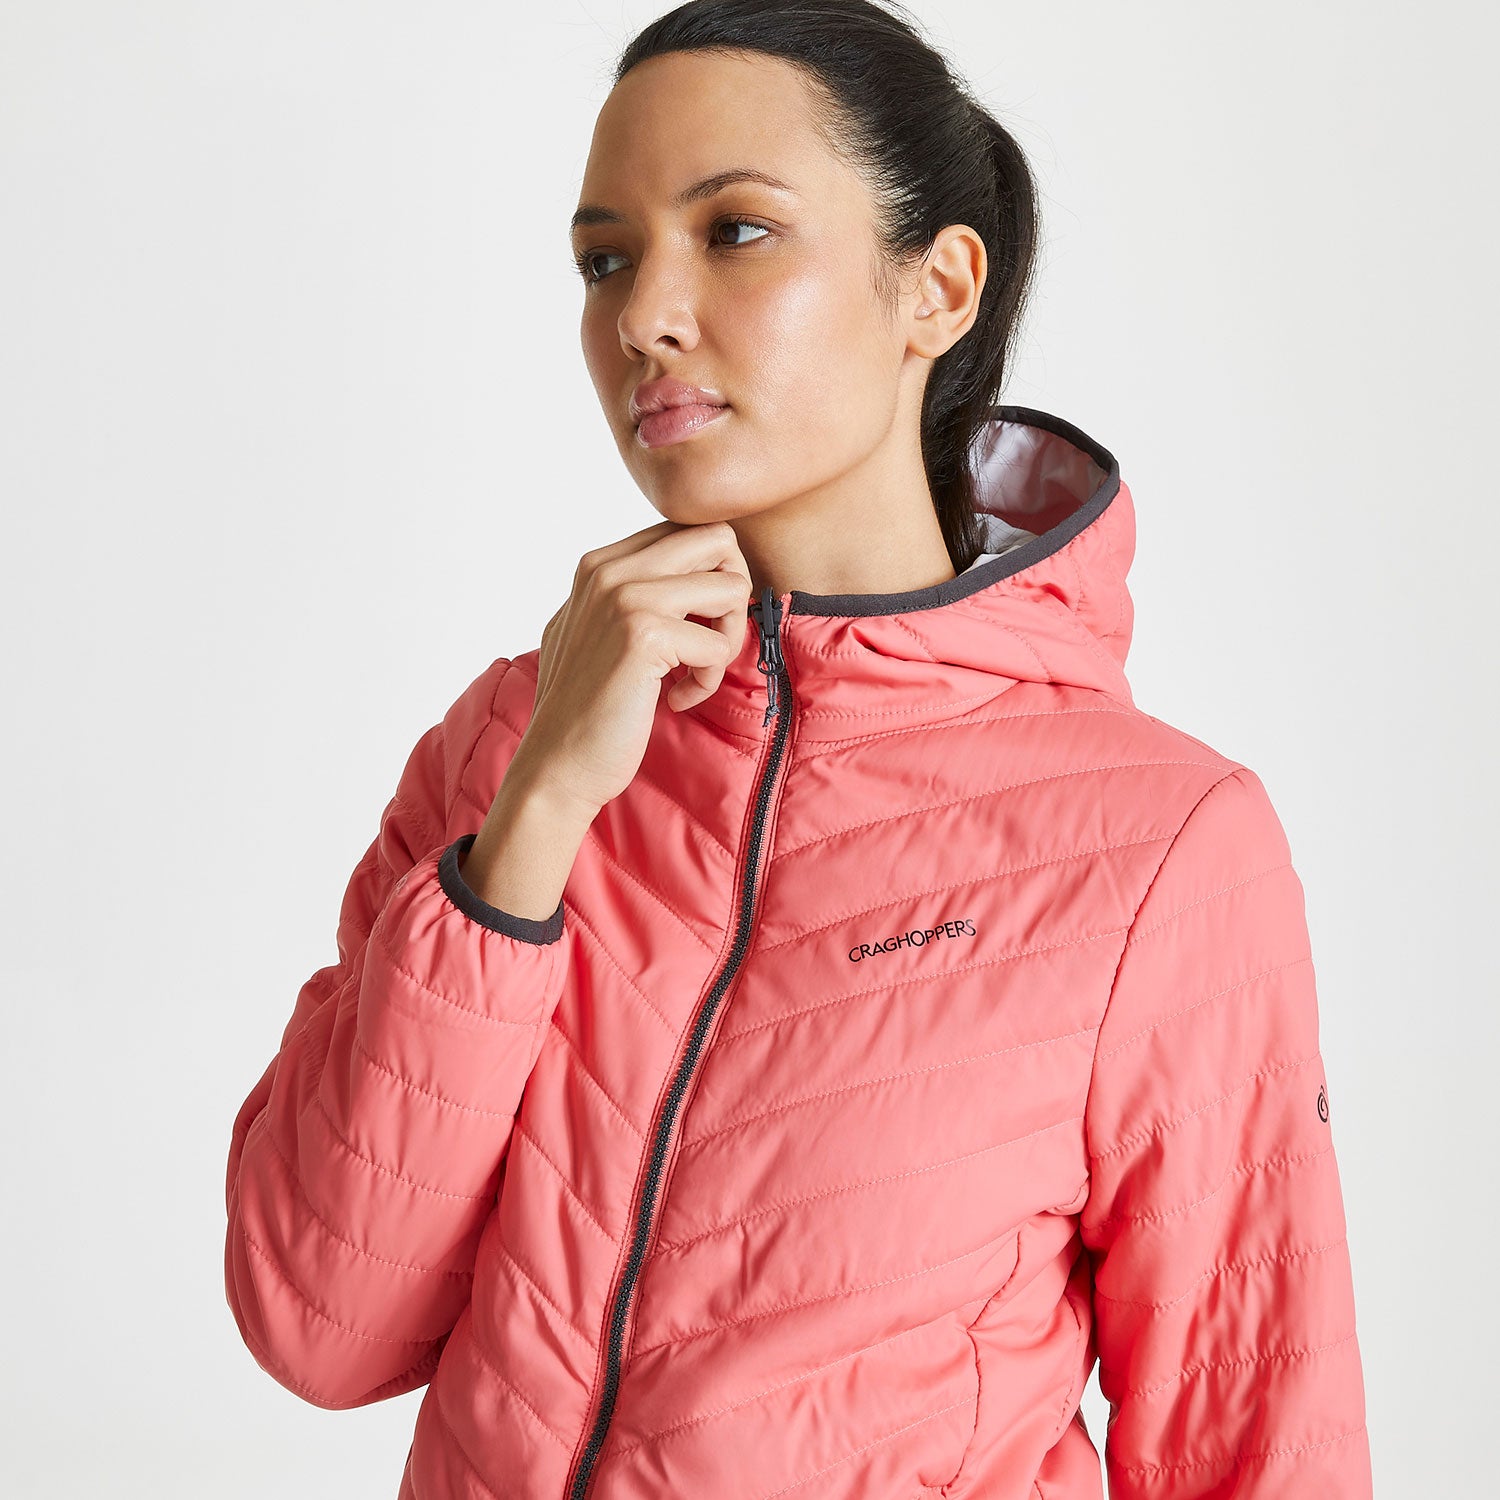 Buy Women jacket, ladies reversible hood jacket for winter(XL) at Amazon.in